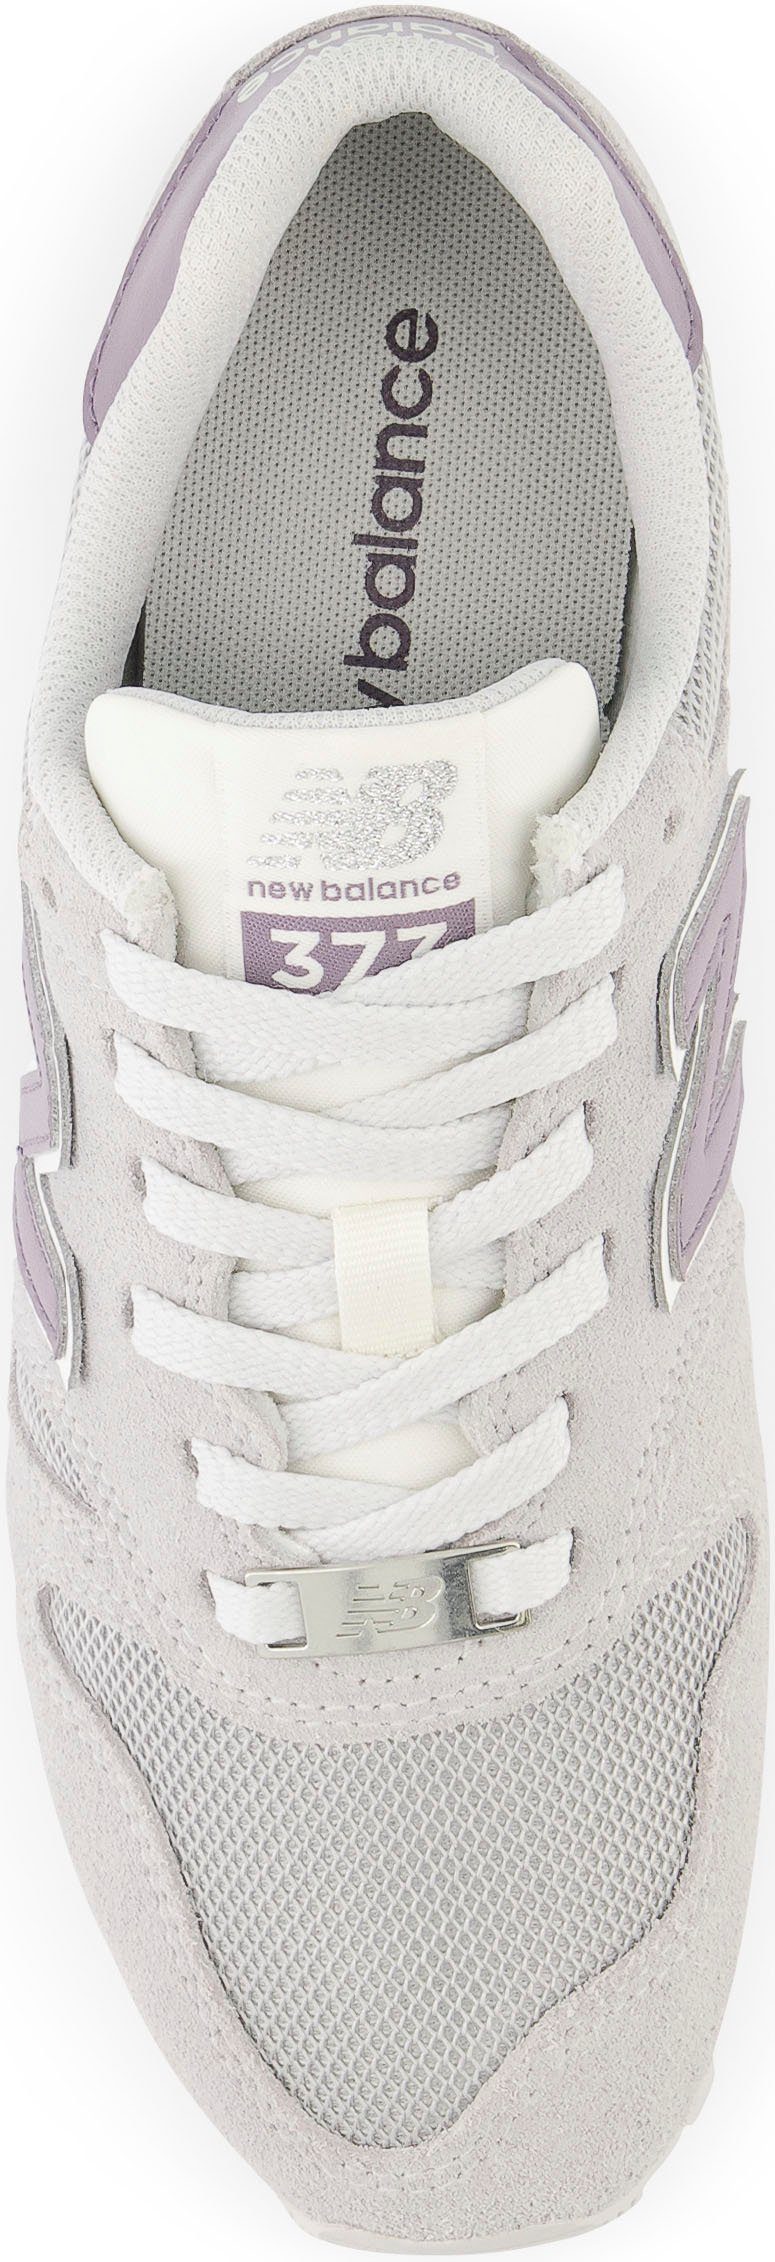 Sneaker Balance grau-anthrazit WL373 New